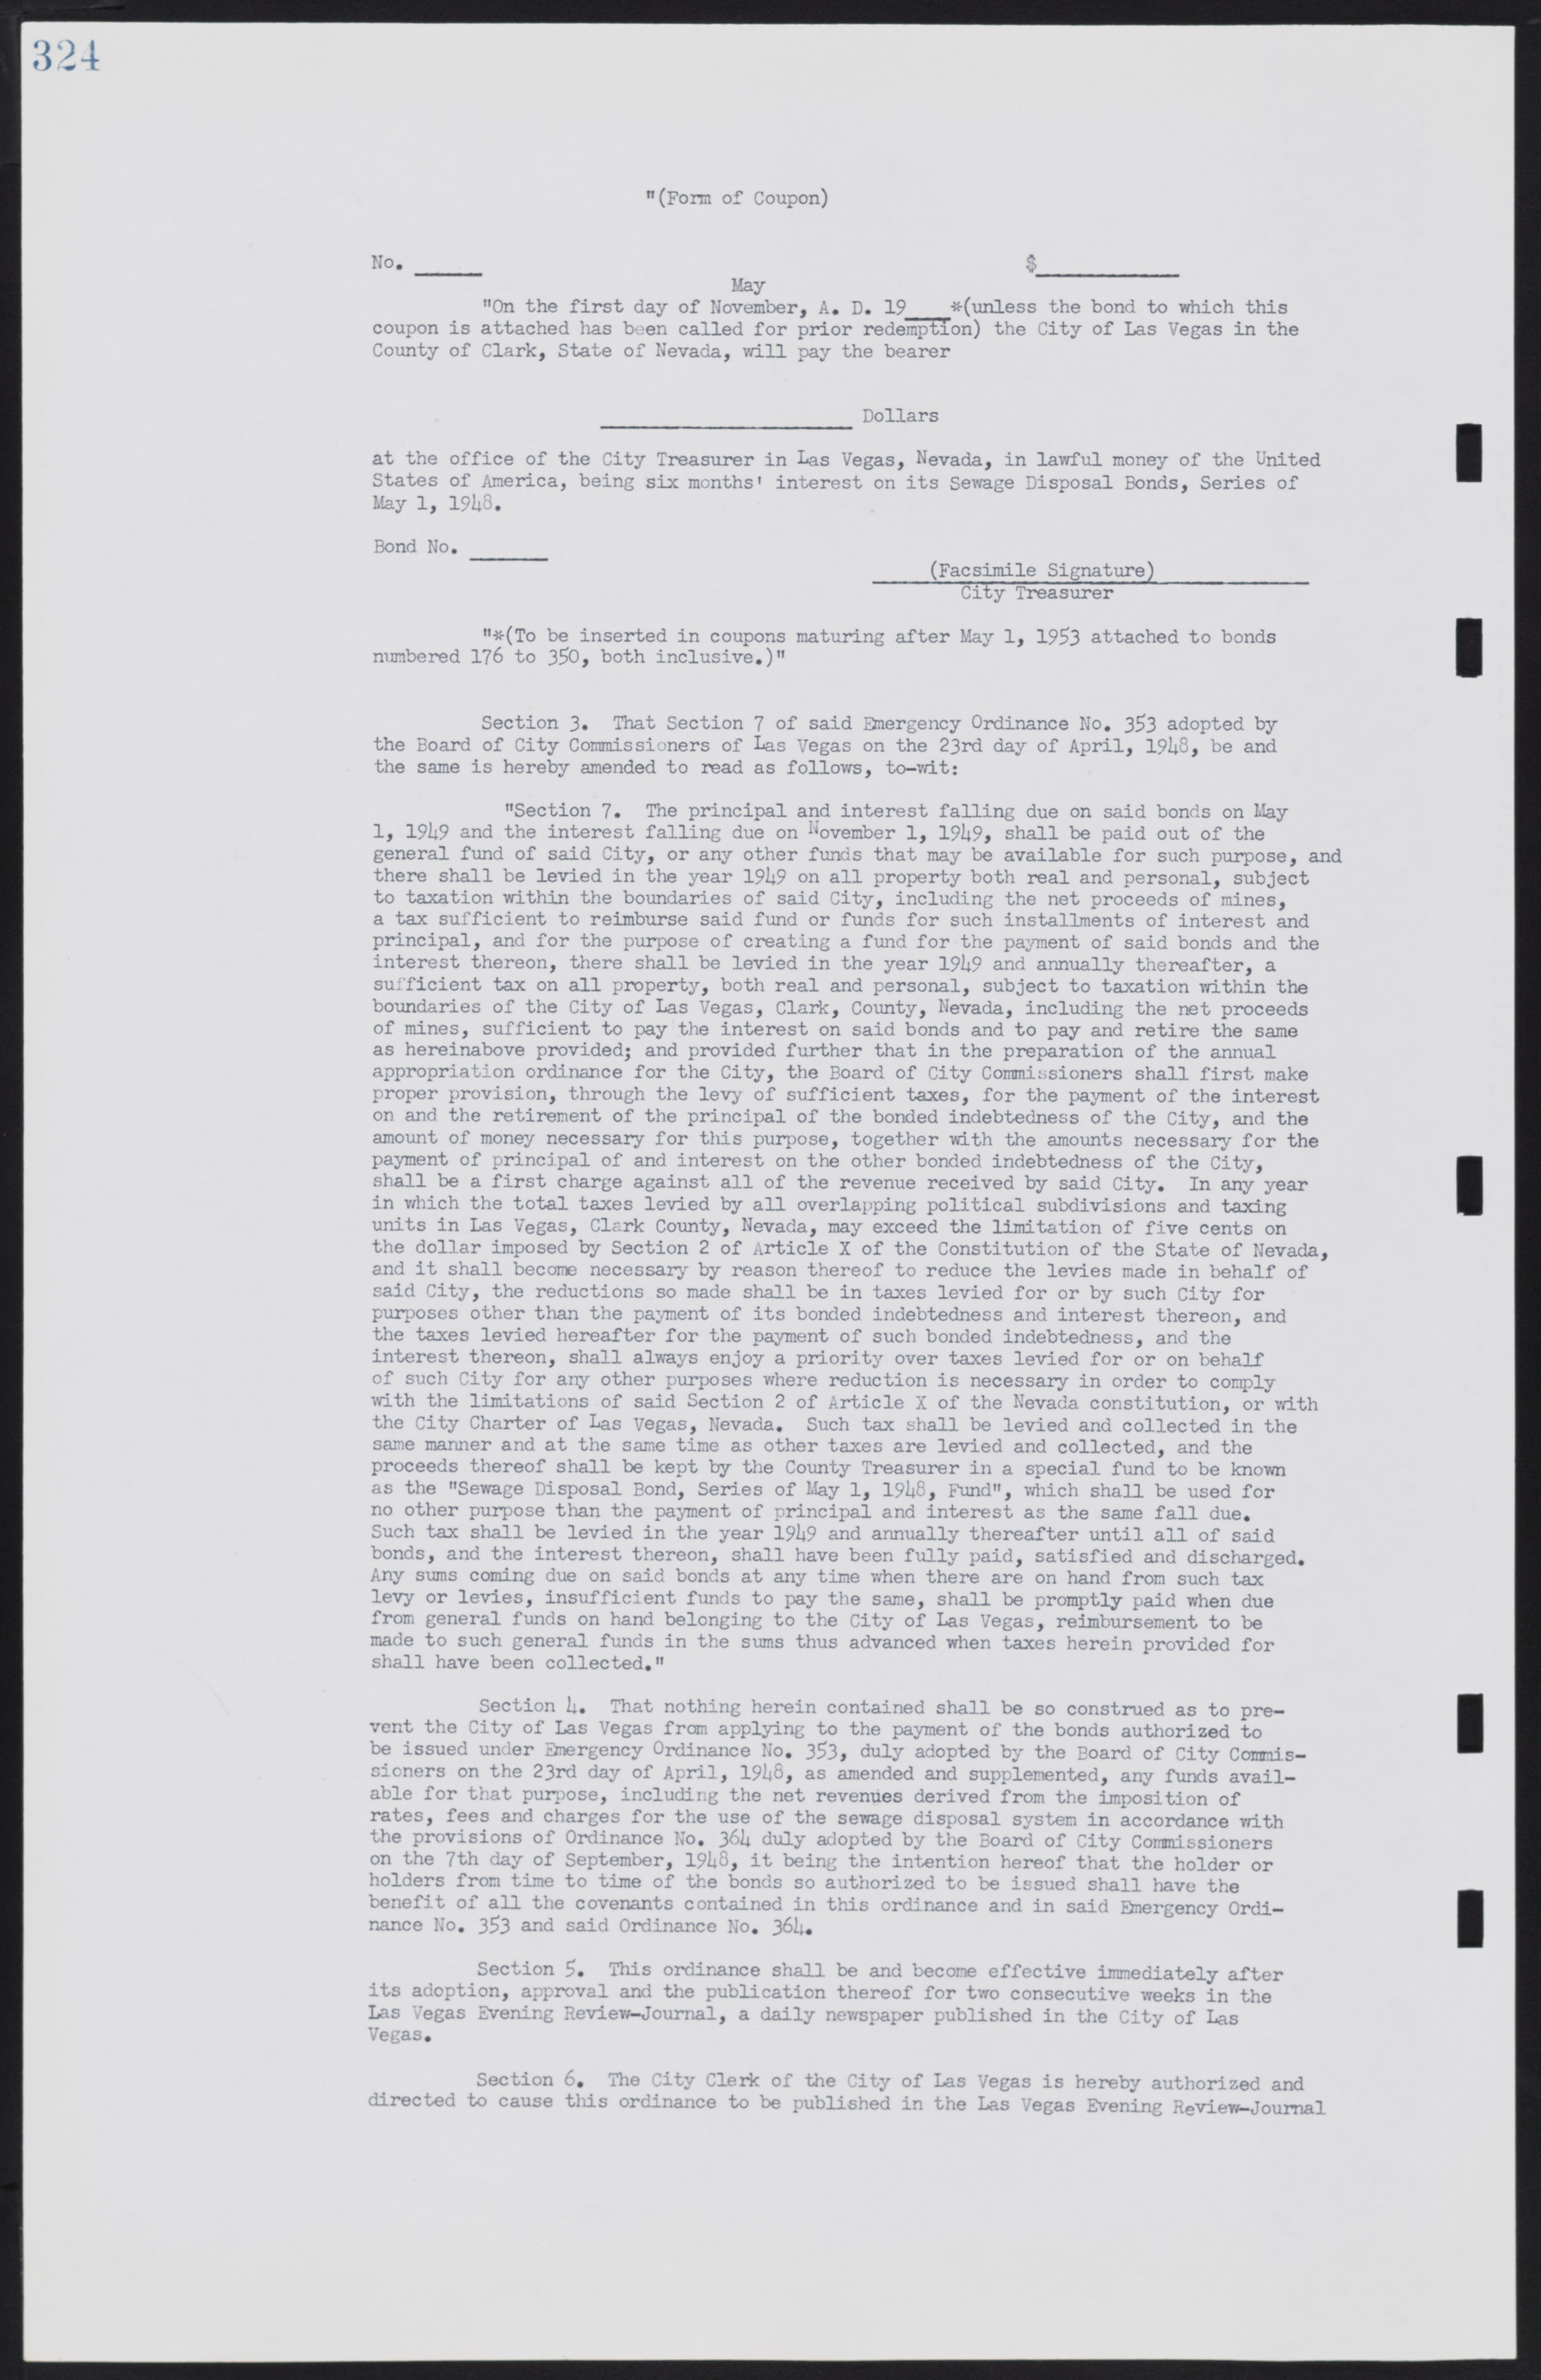 Las Vegas City Commission Minutes, January 7, 1947 to October 26, 1949, lvc000006-348